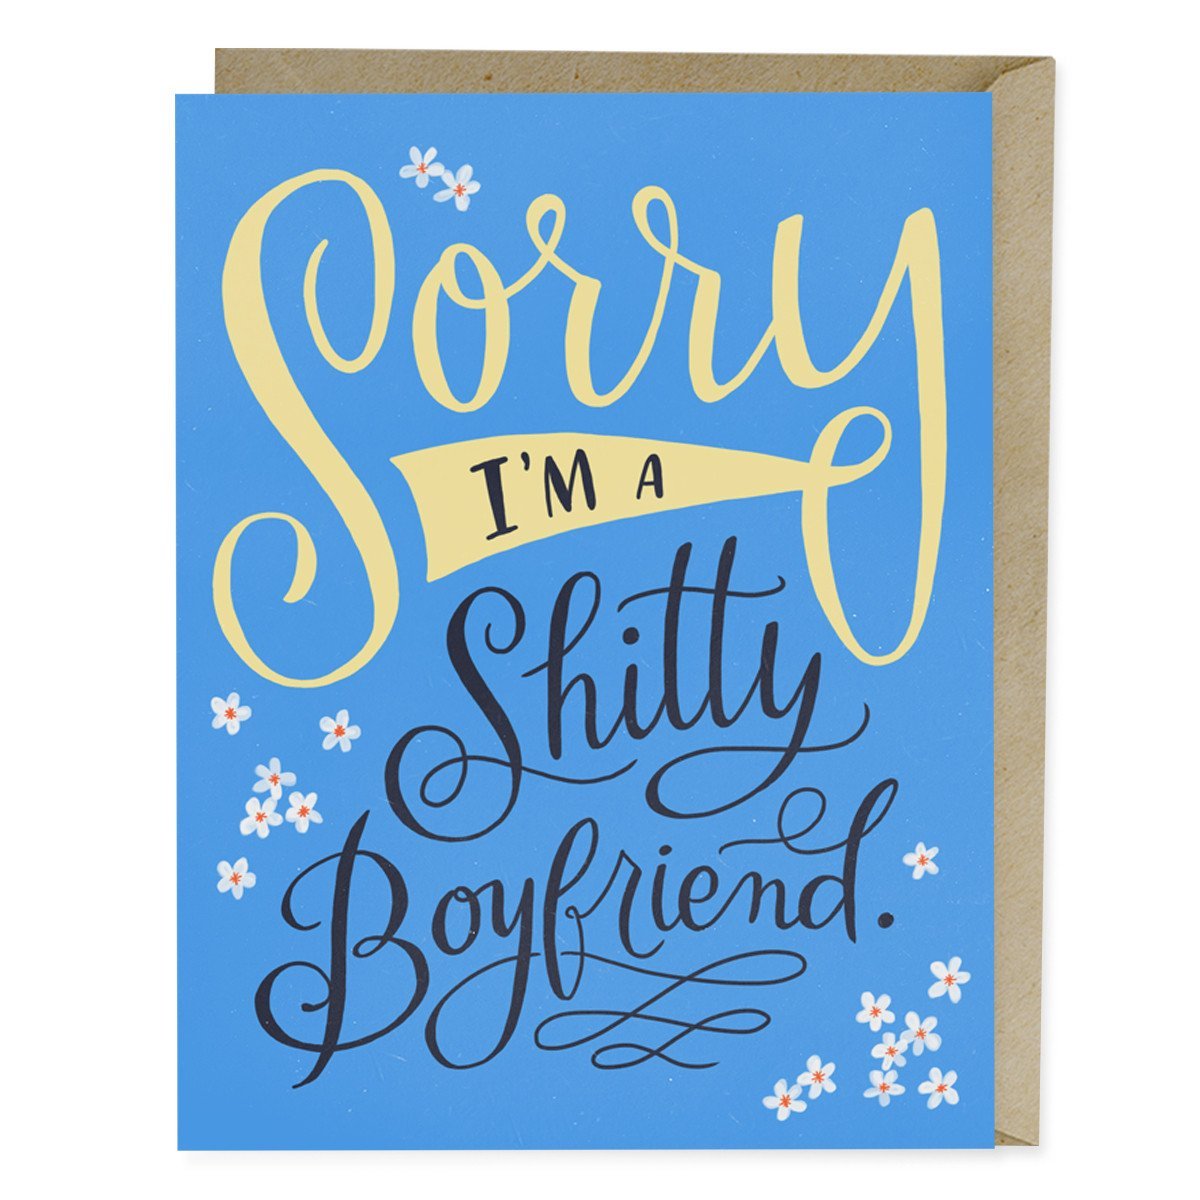 Sorry I M A Shitty Boyfriend Apology Card Emily Mcdowell Friends